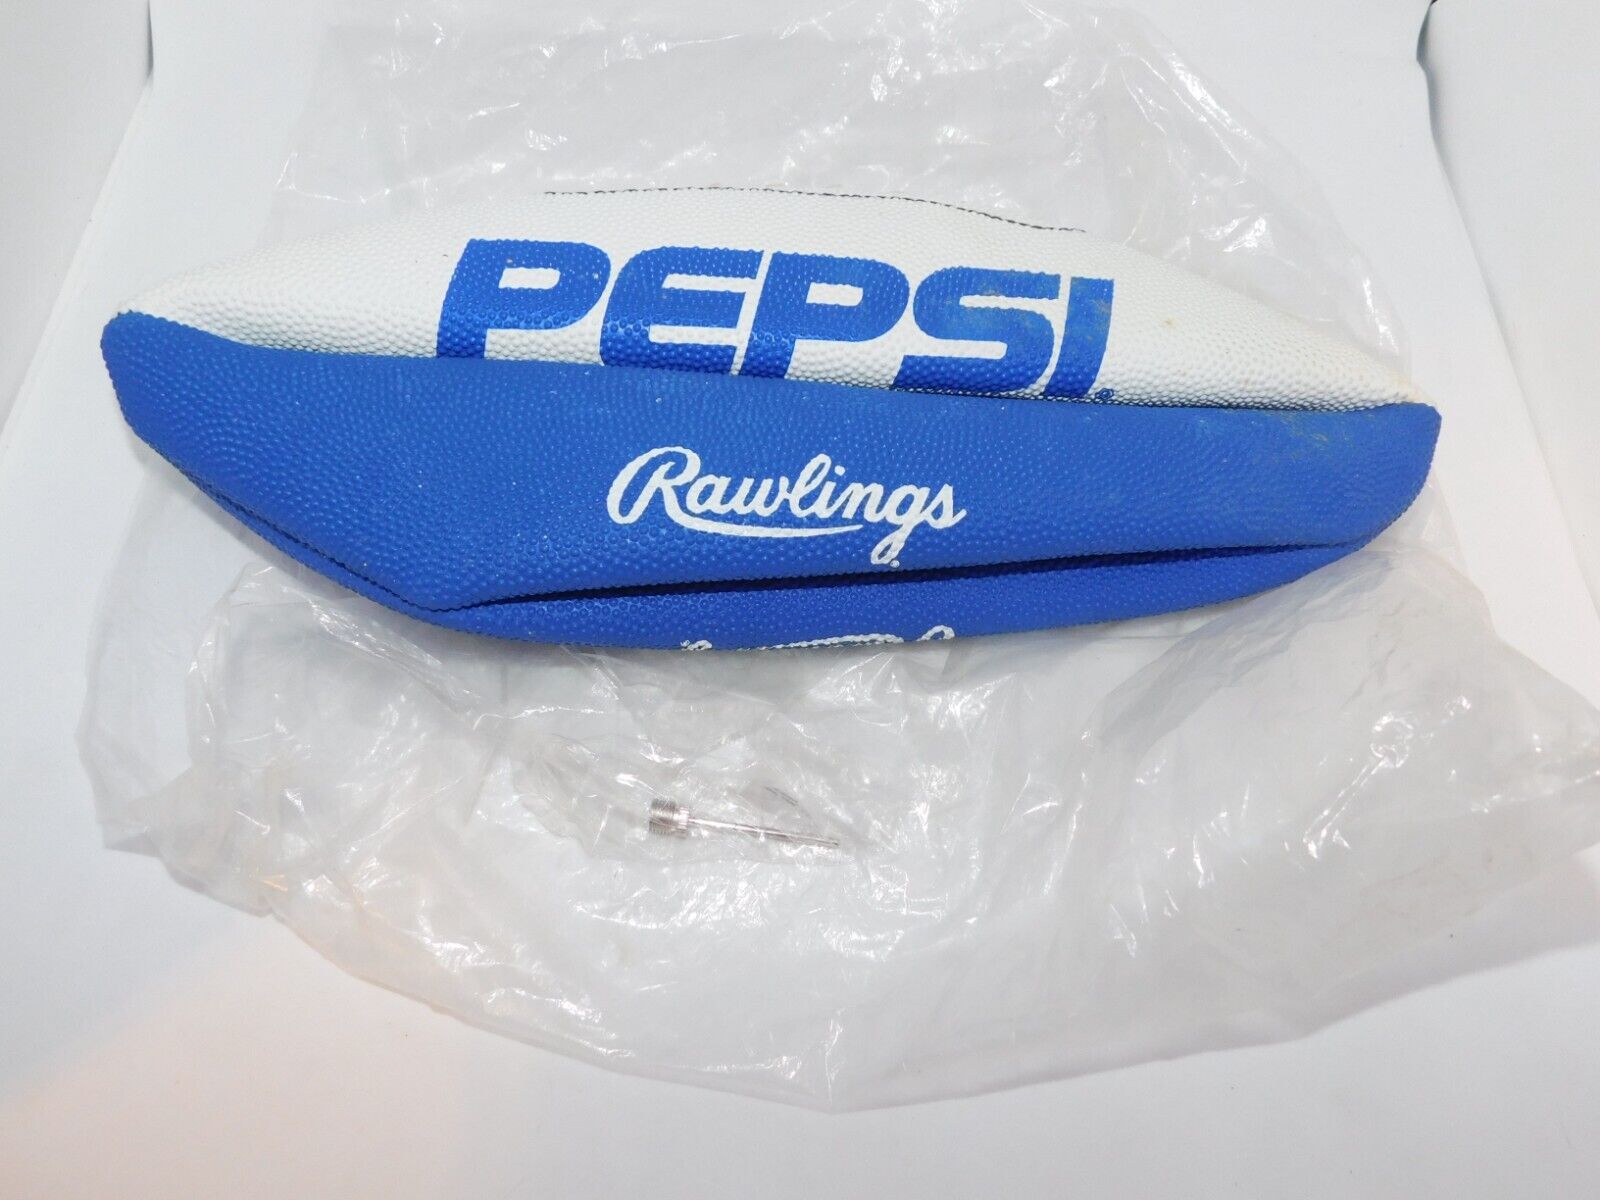 PEPSI RAWLINGS FOOTBALL PROMO PROMOTIONAL NEW BLUE & WHITE